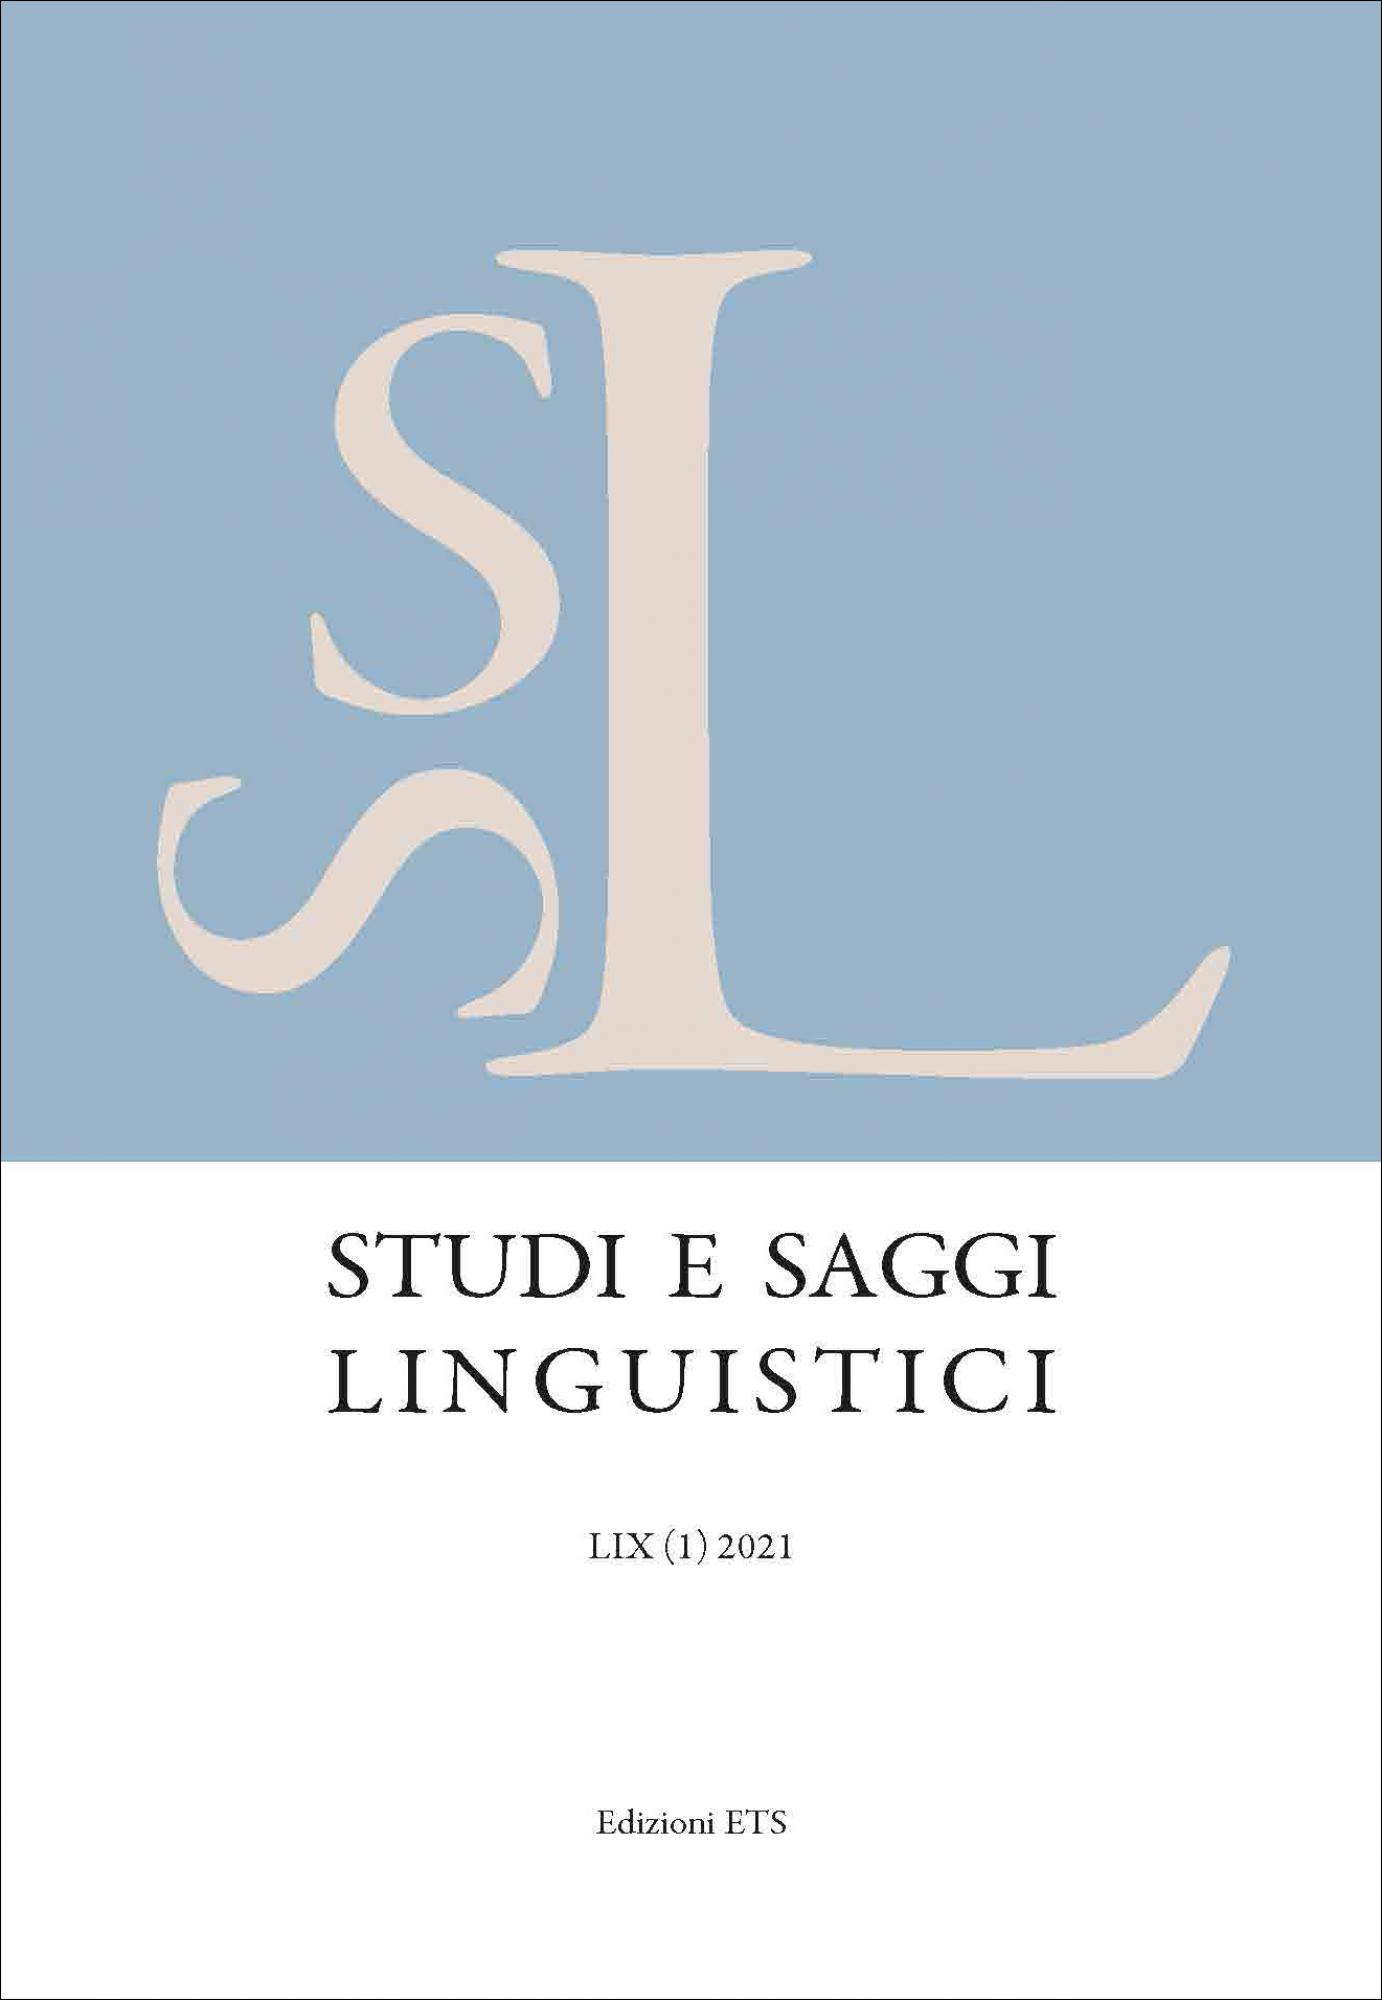 Studi e saggi linguistici .LIX/(1)2021